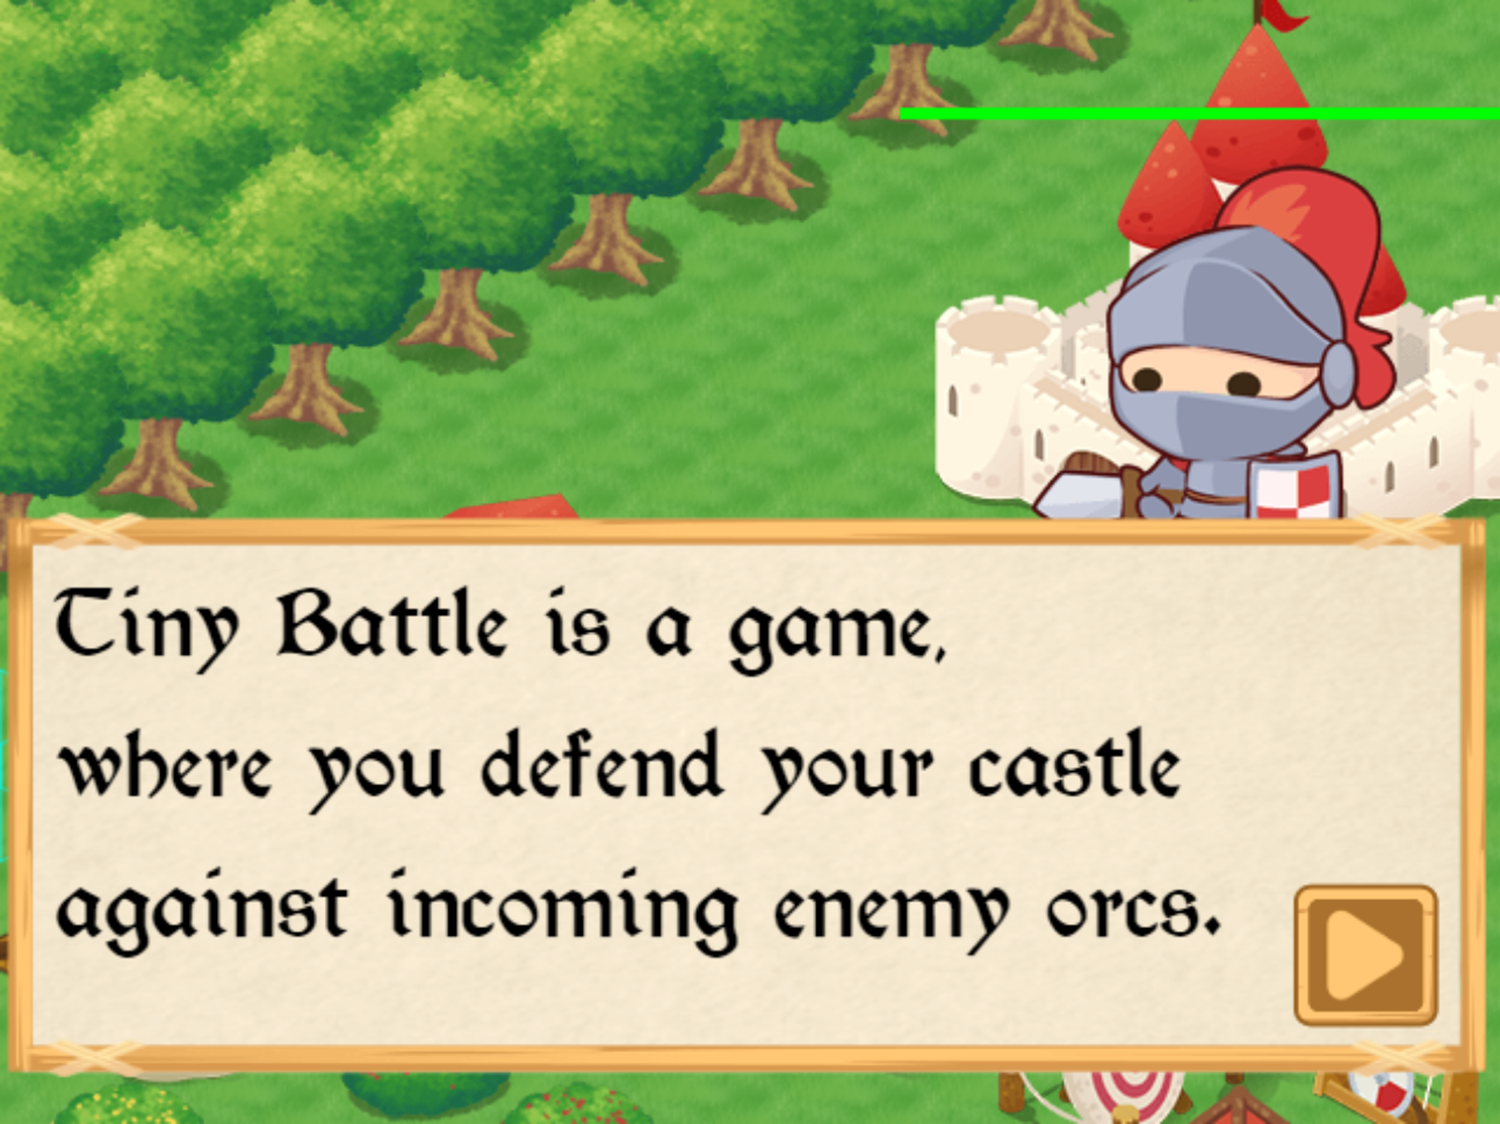 Tiny Battle Game Goal Screenshot.